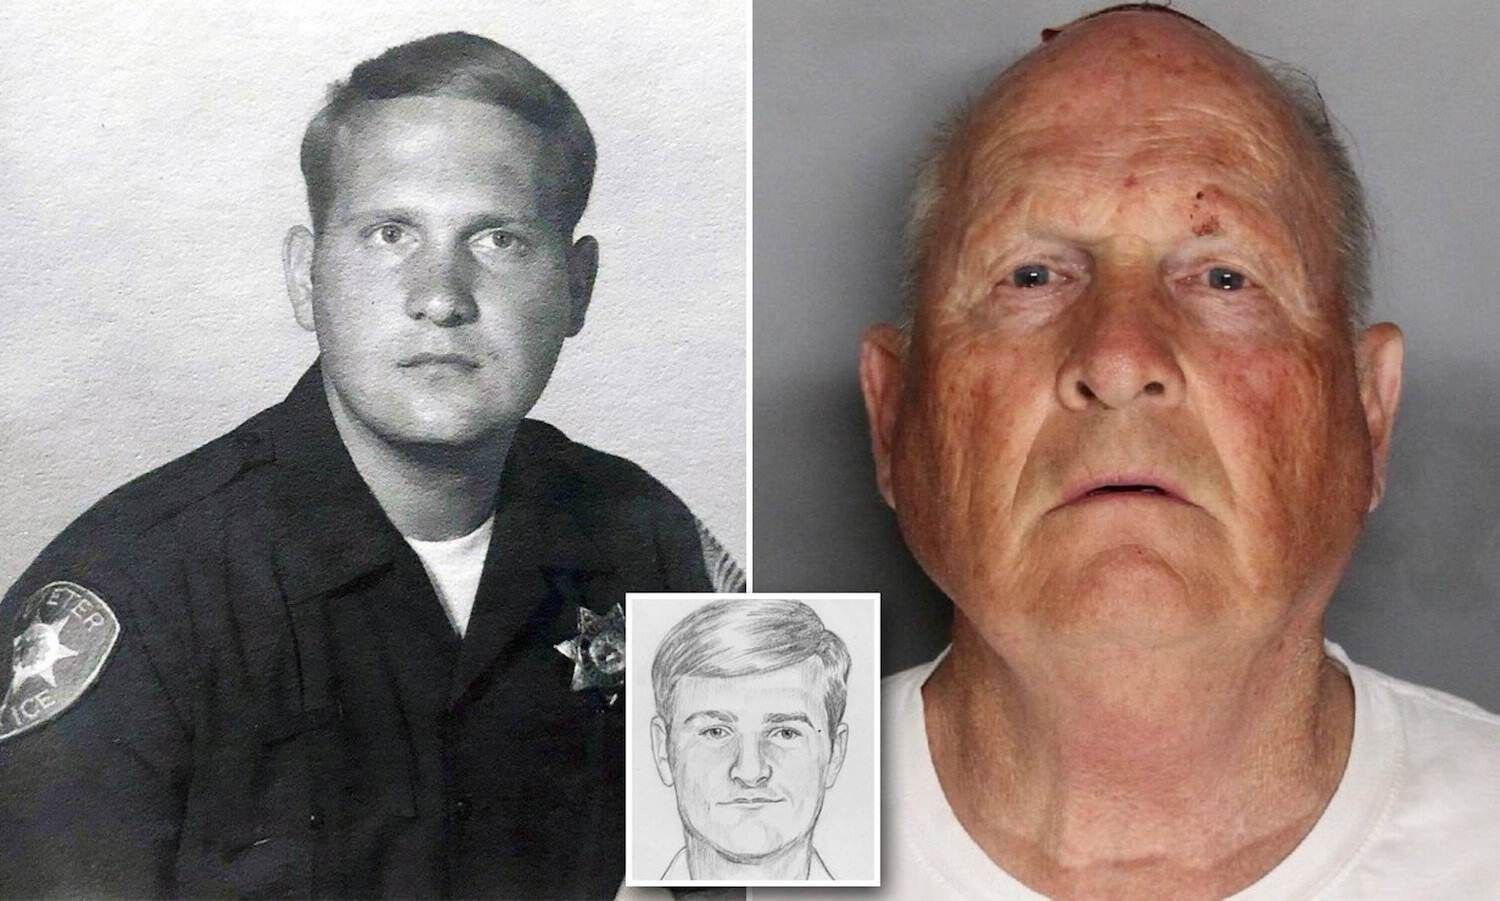 Golden State Killer was a police officer